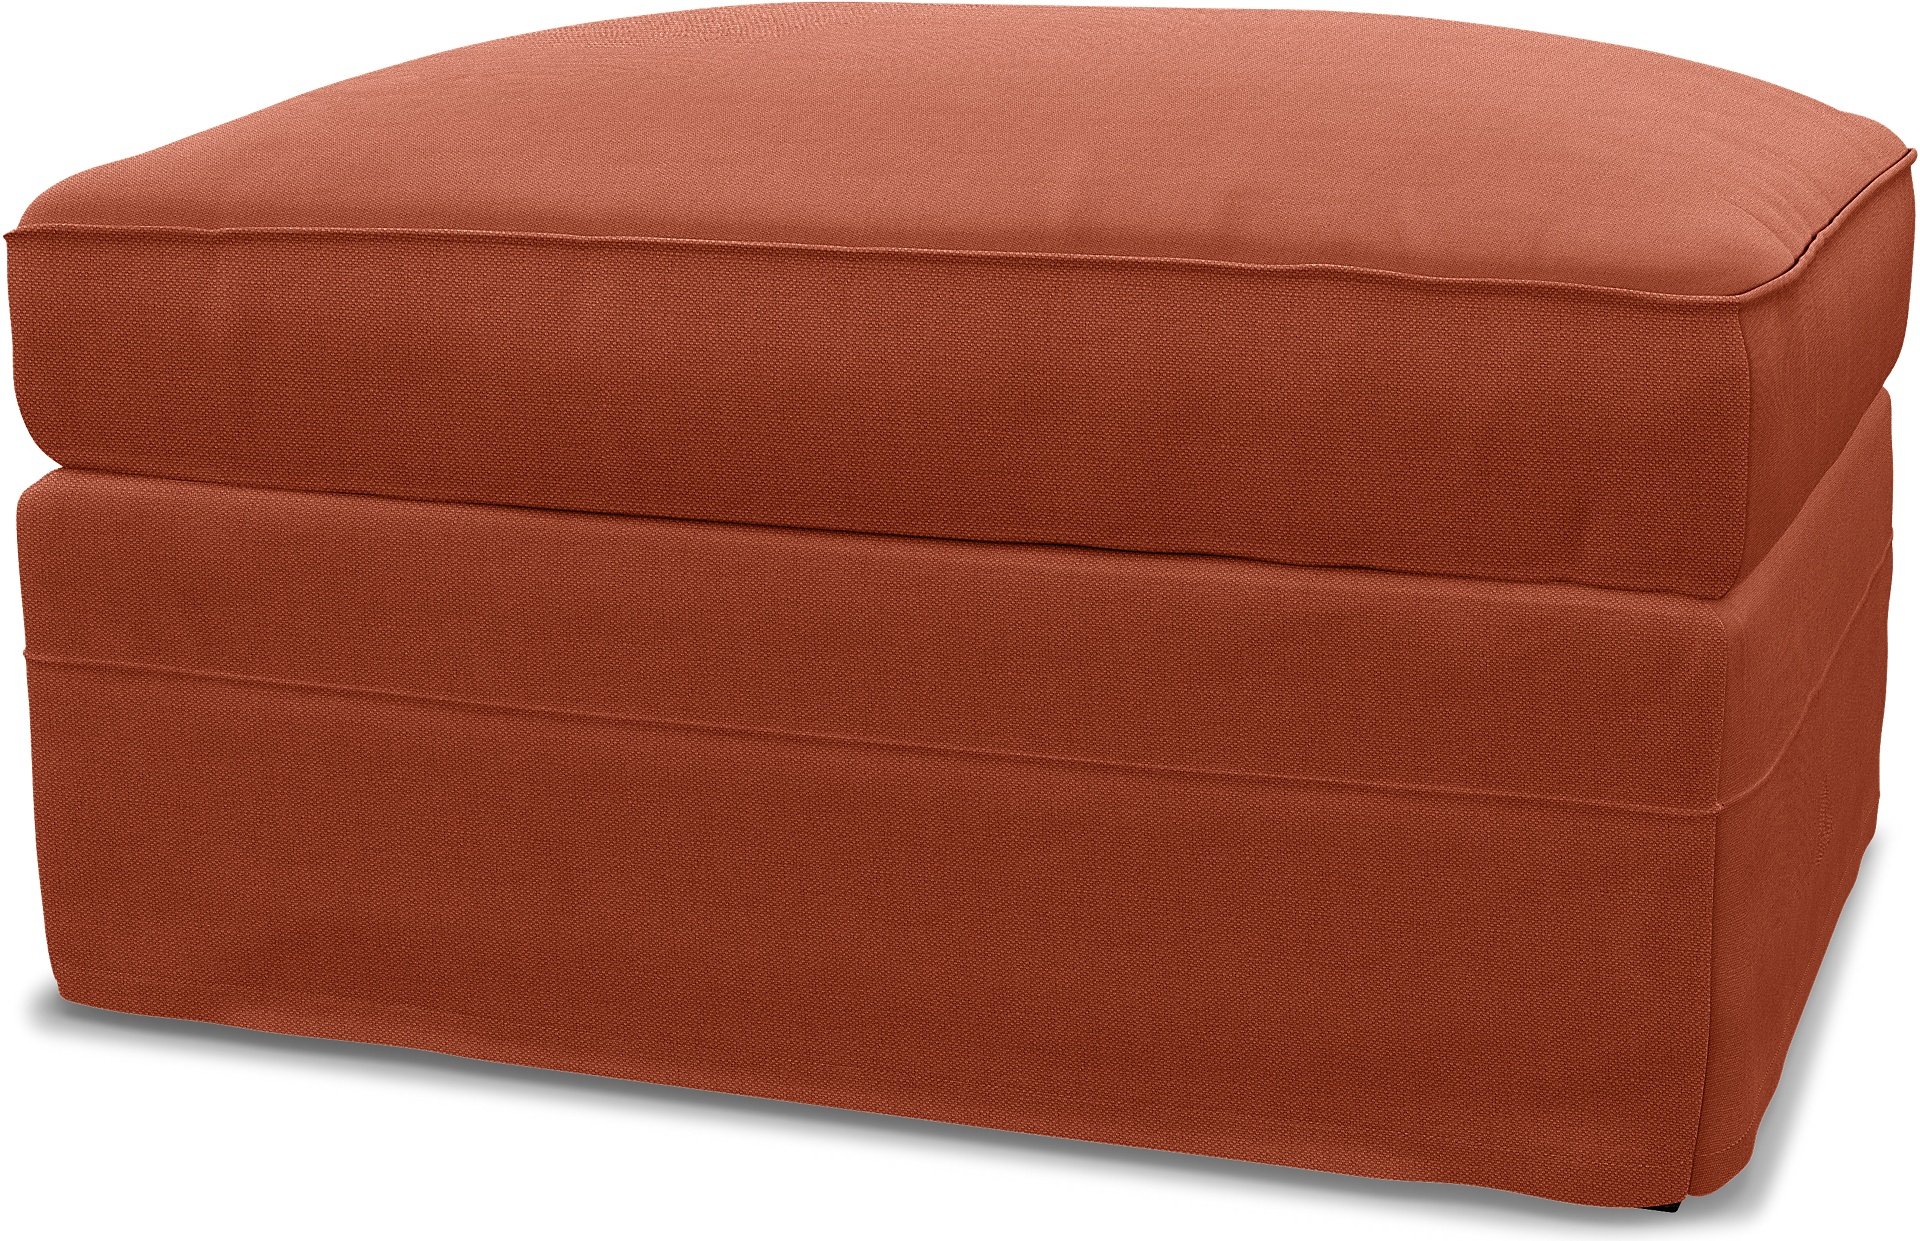 IKEA - Gronlid Footstool with Storage Cover, Burnt Orange, Linen - Bemz